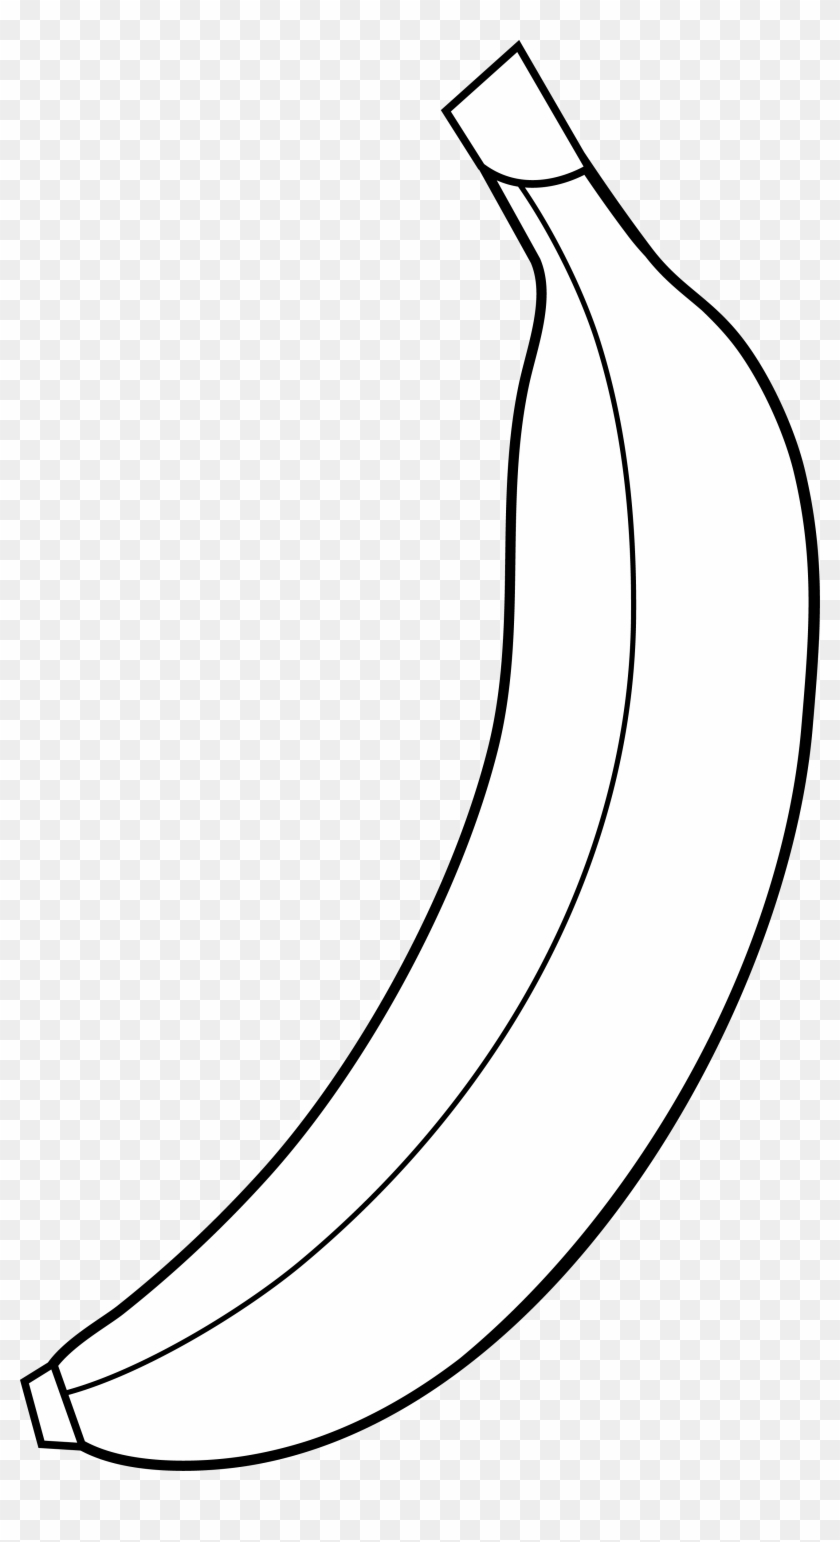 Banana Clip Art - White Banana Clipart #289366